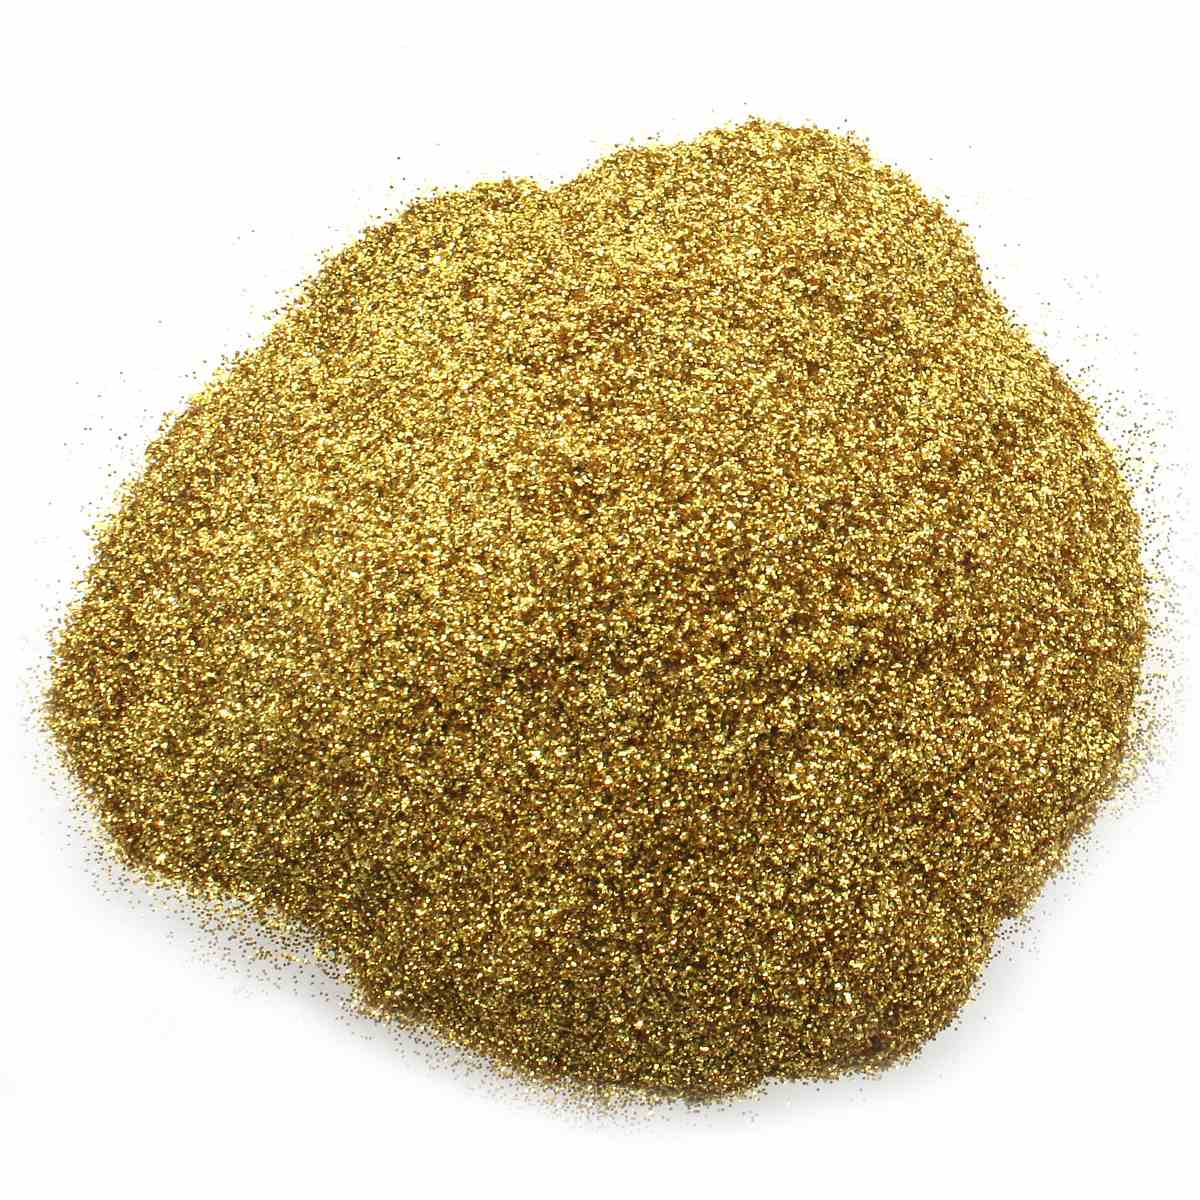 jags-mumbai Glitter Powder Jags Glitter Sparkle Powder Light Gold 20gm